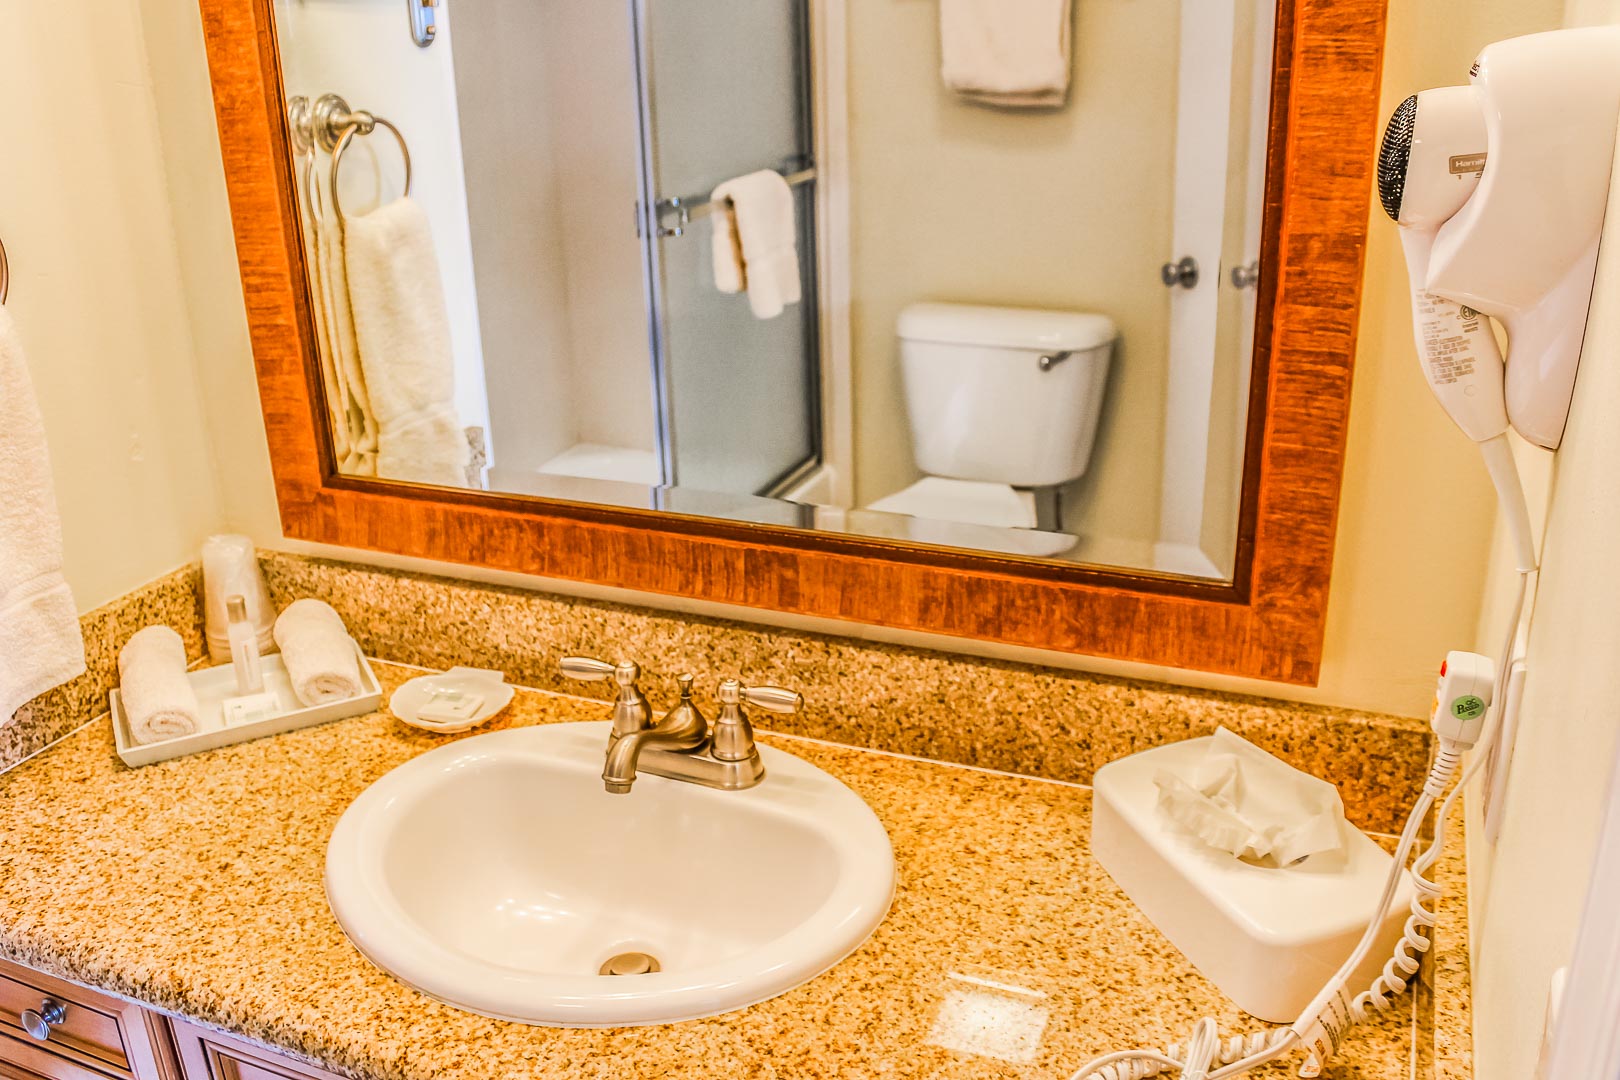 A clean bathroom at VRI's Ft. Lauderdale Beach Resort in Florida.